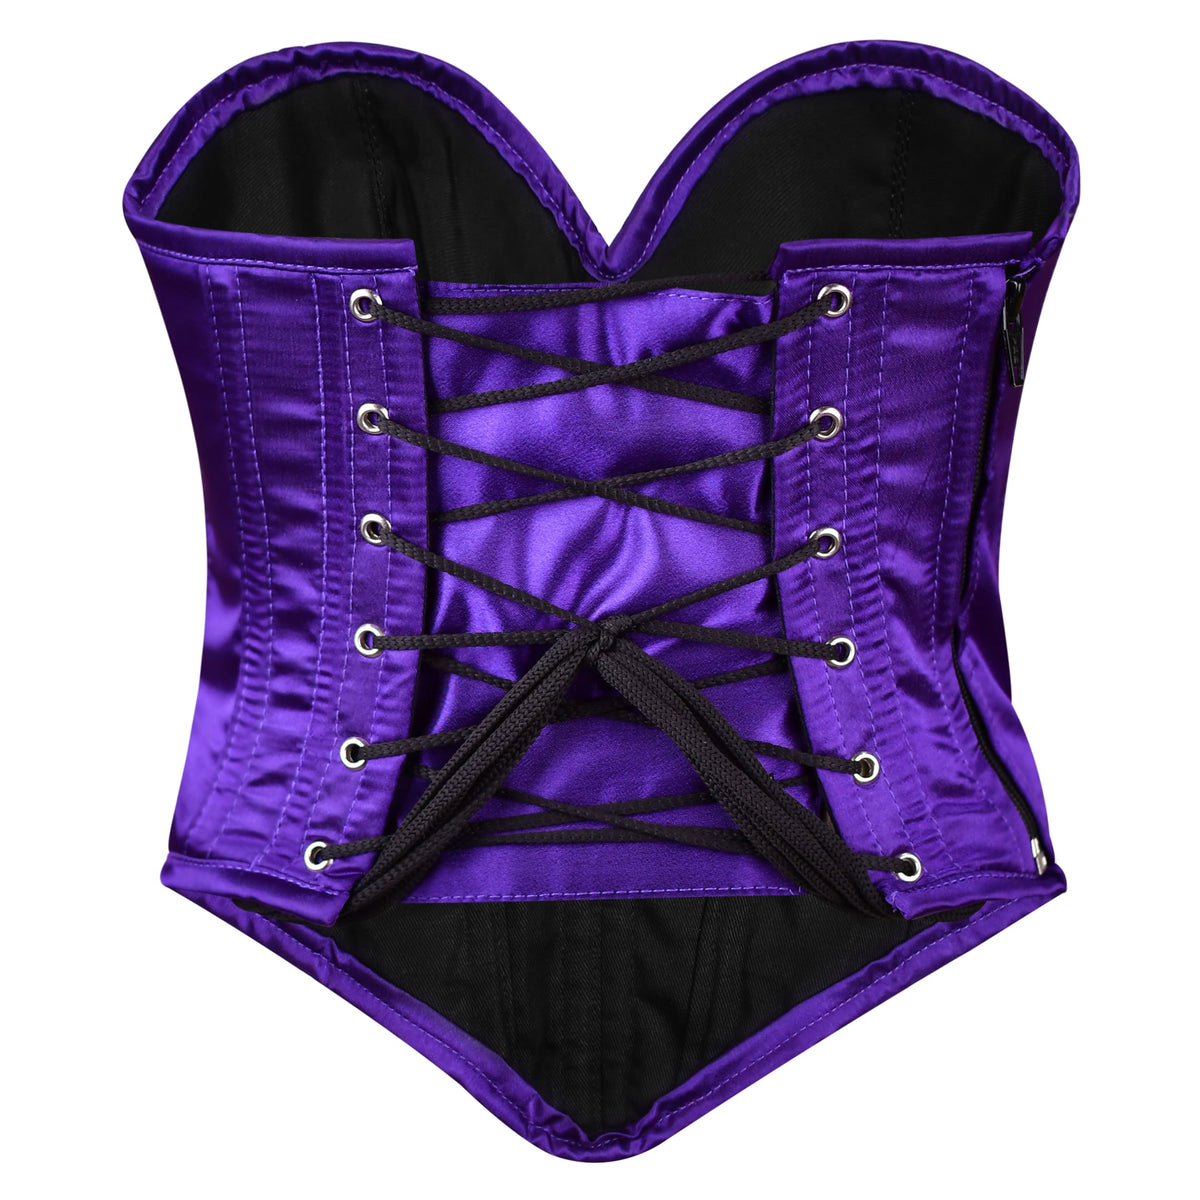 Purple Satin corset top